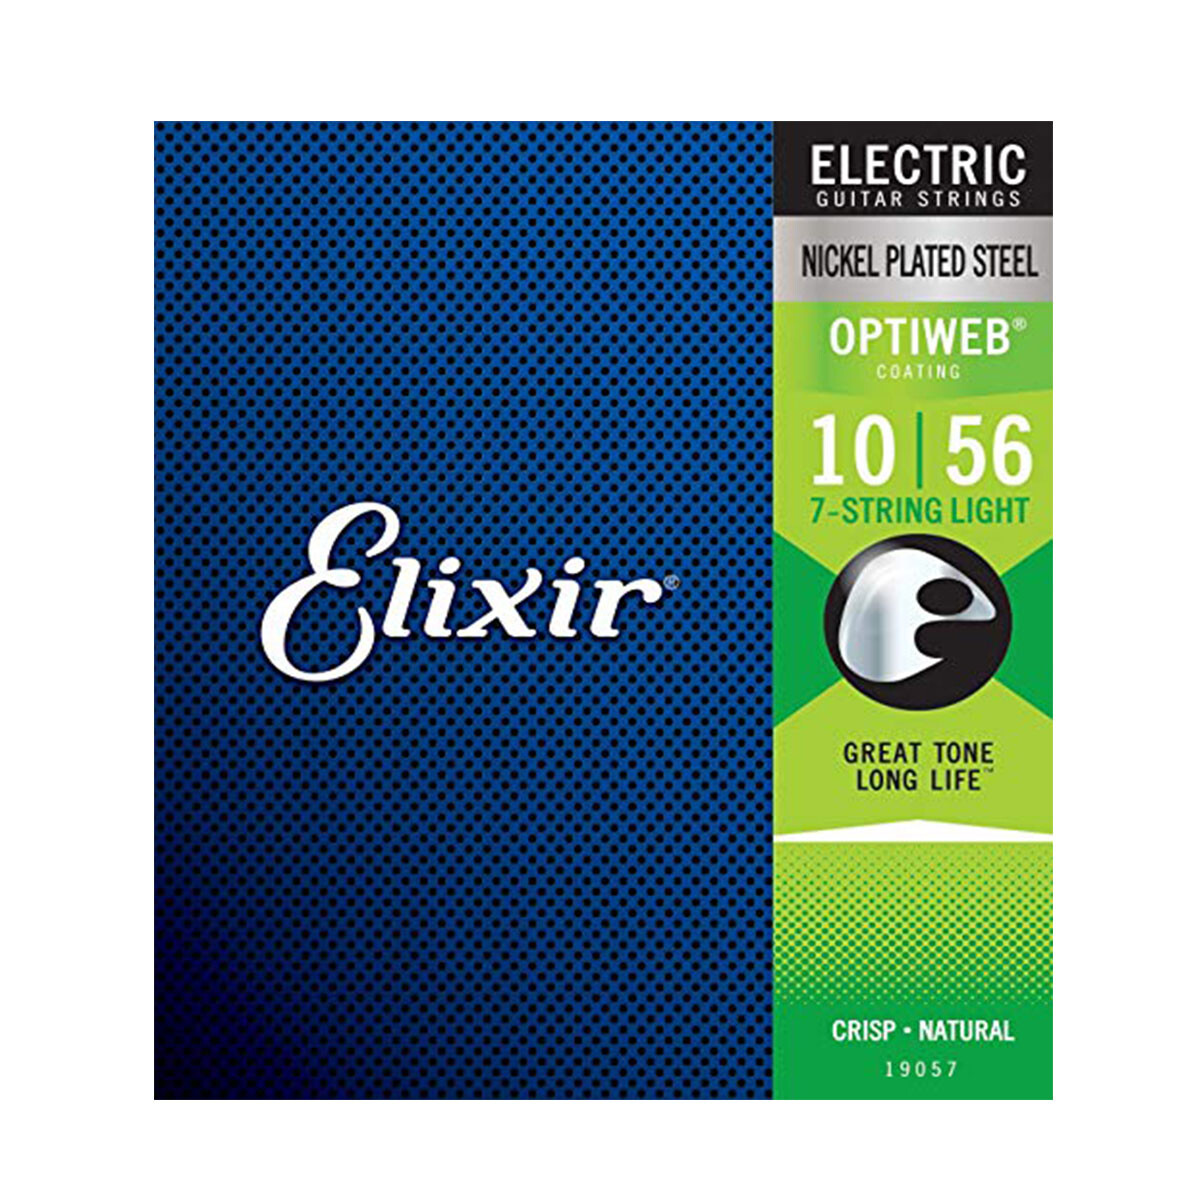 Encordado Electrica Elixir Optiweb 7 St 10-56 